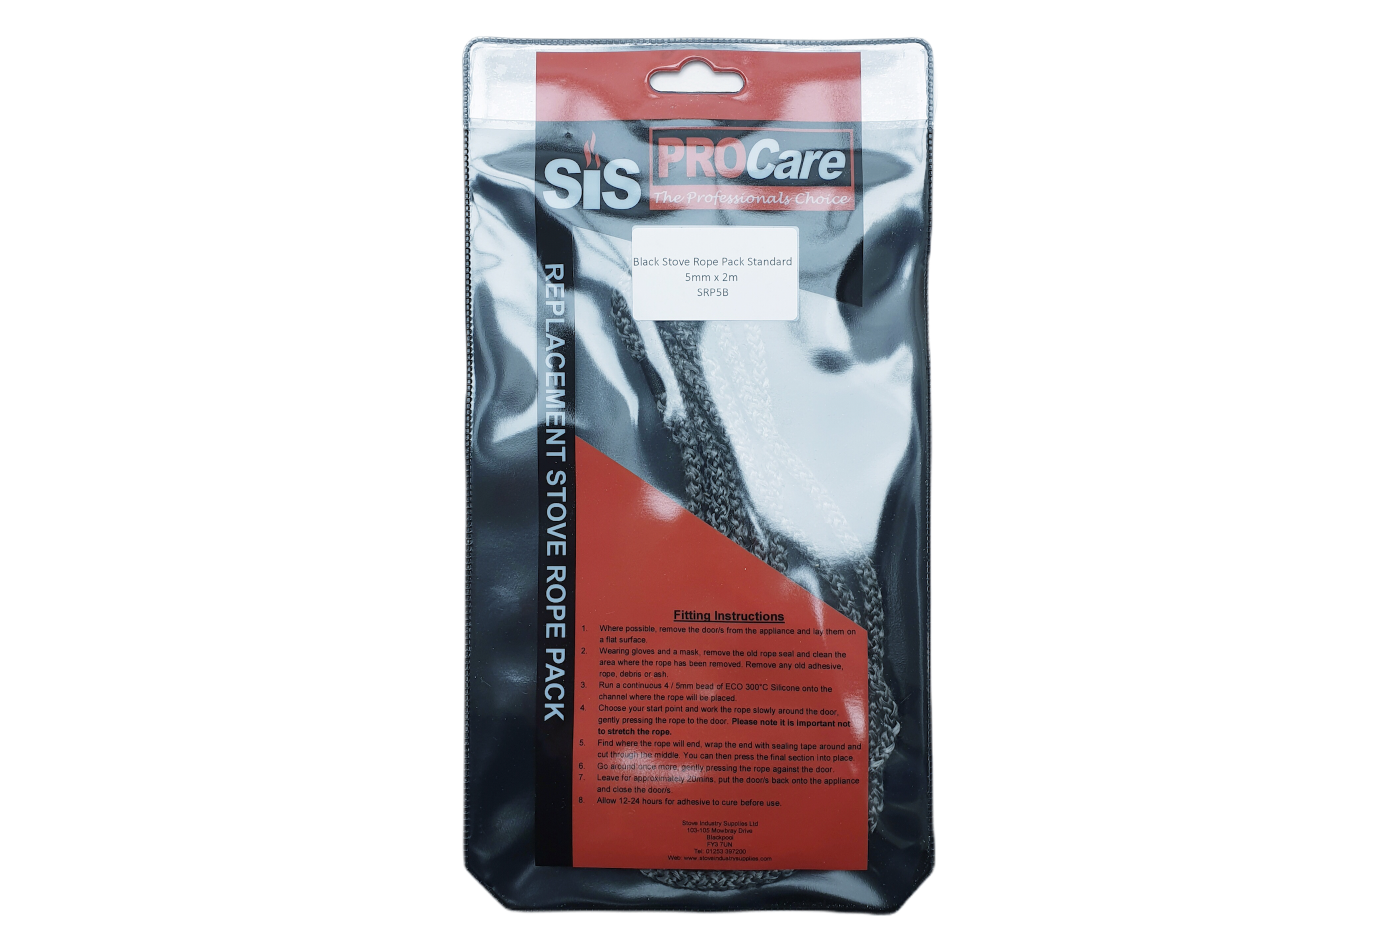 SiS Procare Black 5 milimetre x 2 metre Standard Stove Rope Pack - product code SRP5B